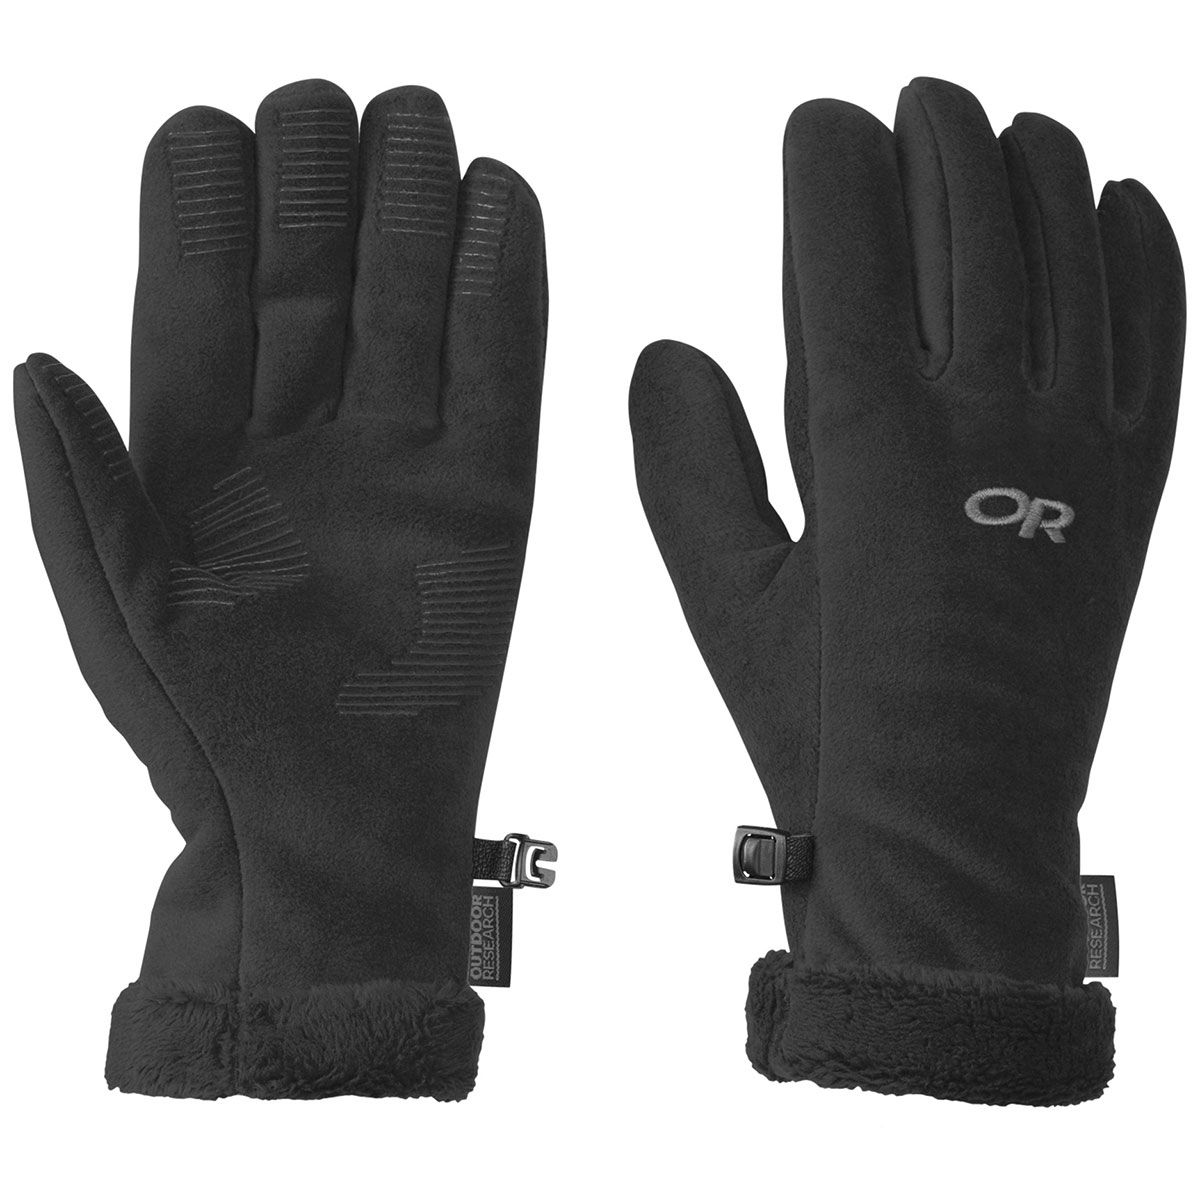 Outdoor Research Women's Fuzzy Sensor Gloves - Black, S